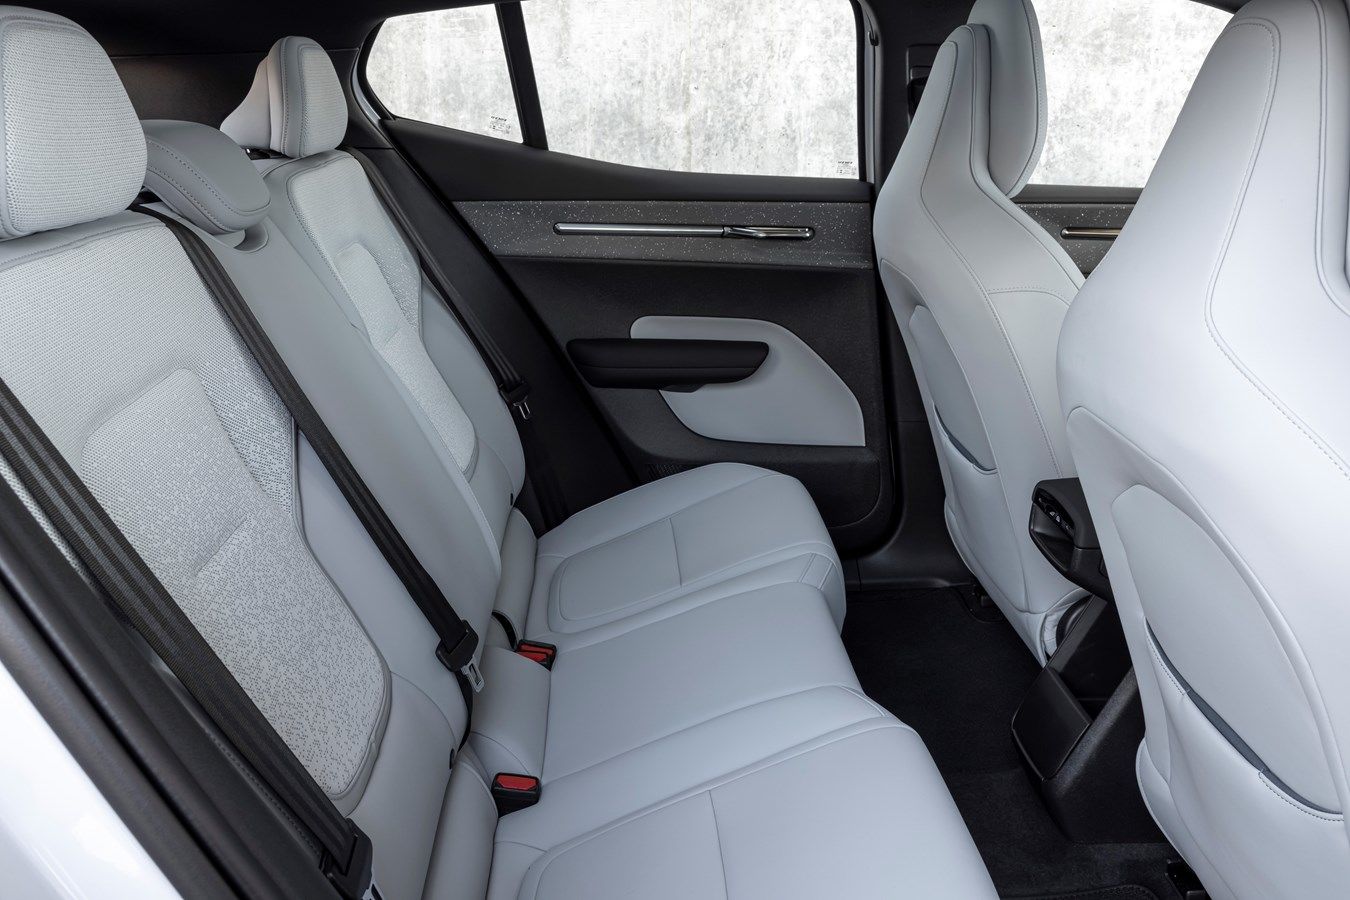 Volvo seats. White Volvo seats. Volvo EX30 interior. Volvo EX30 seats. Luxurious Volvo SUV interior.